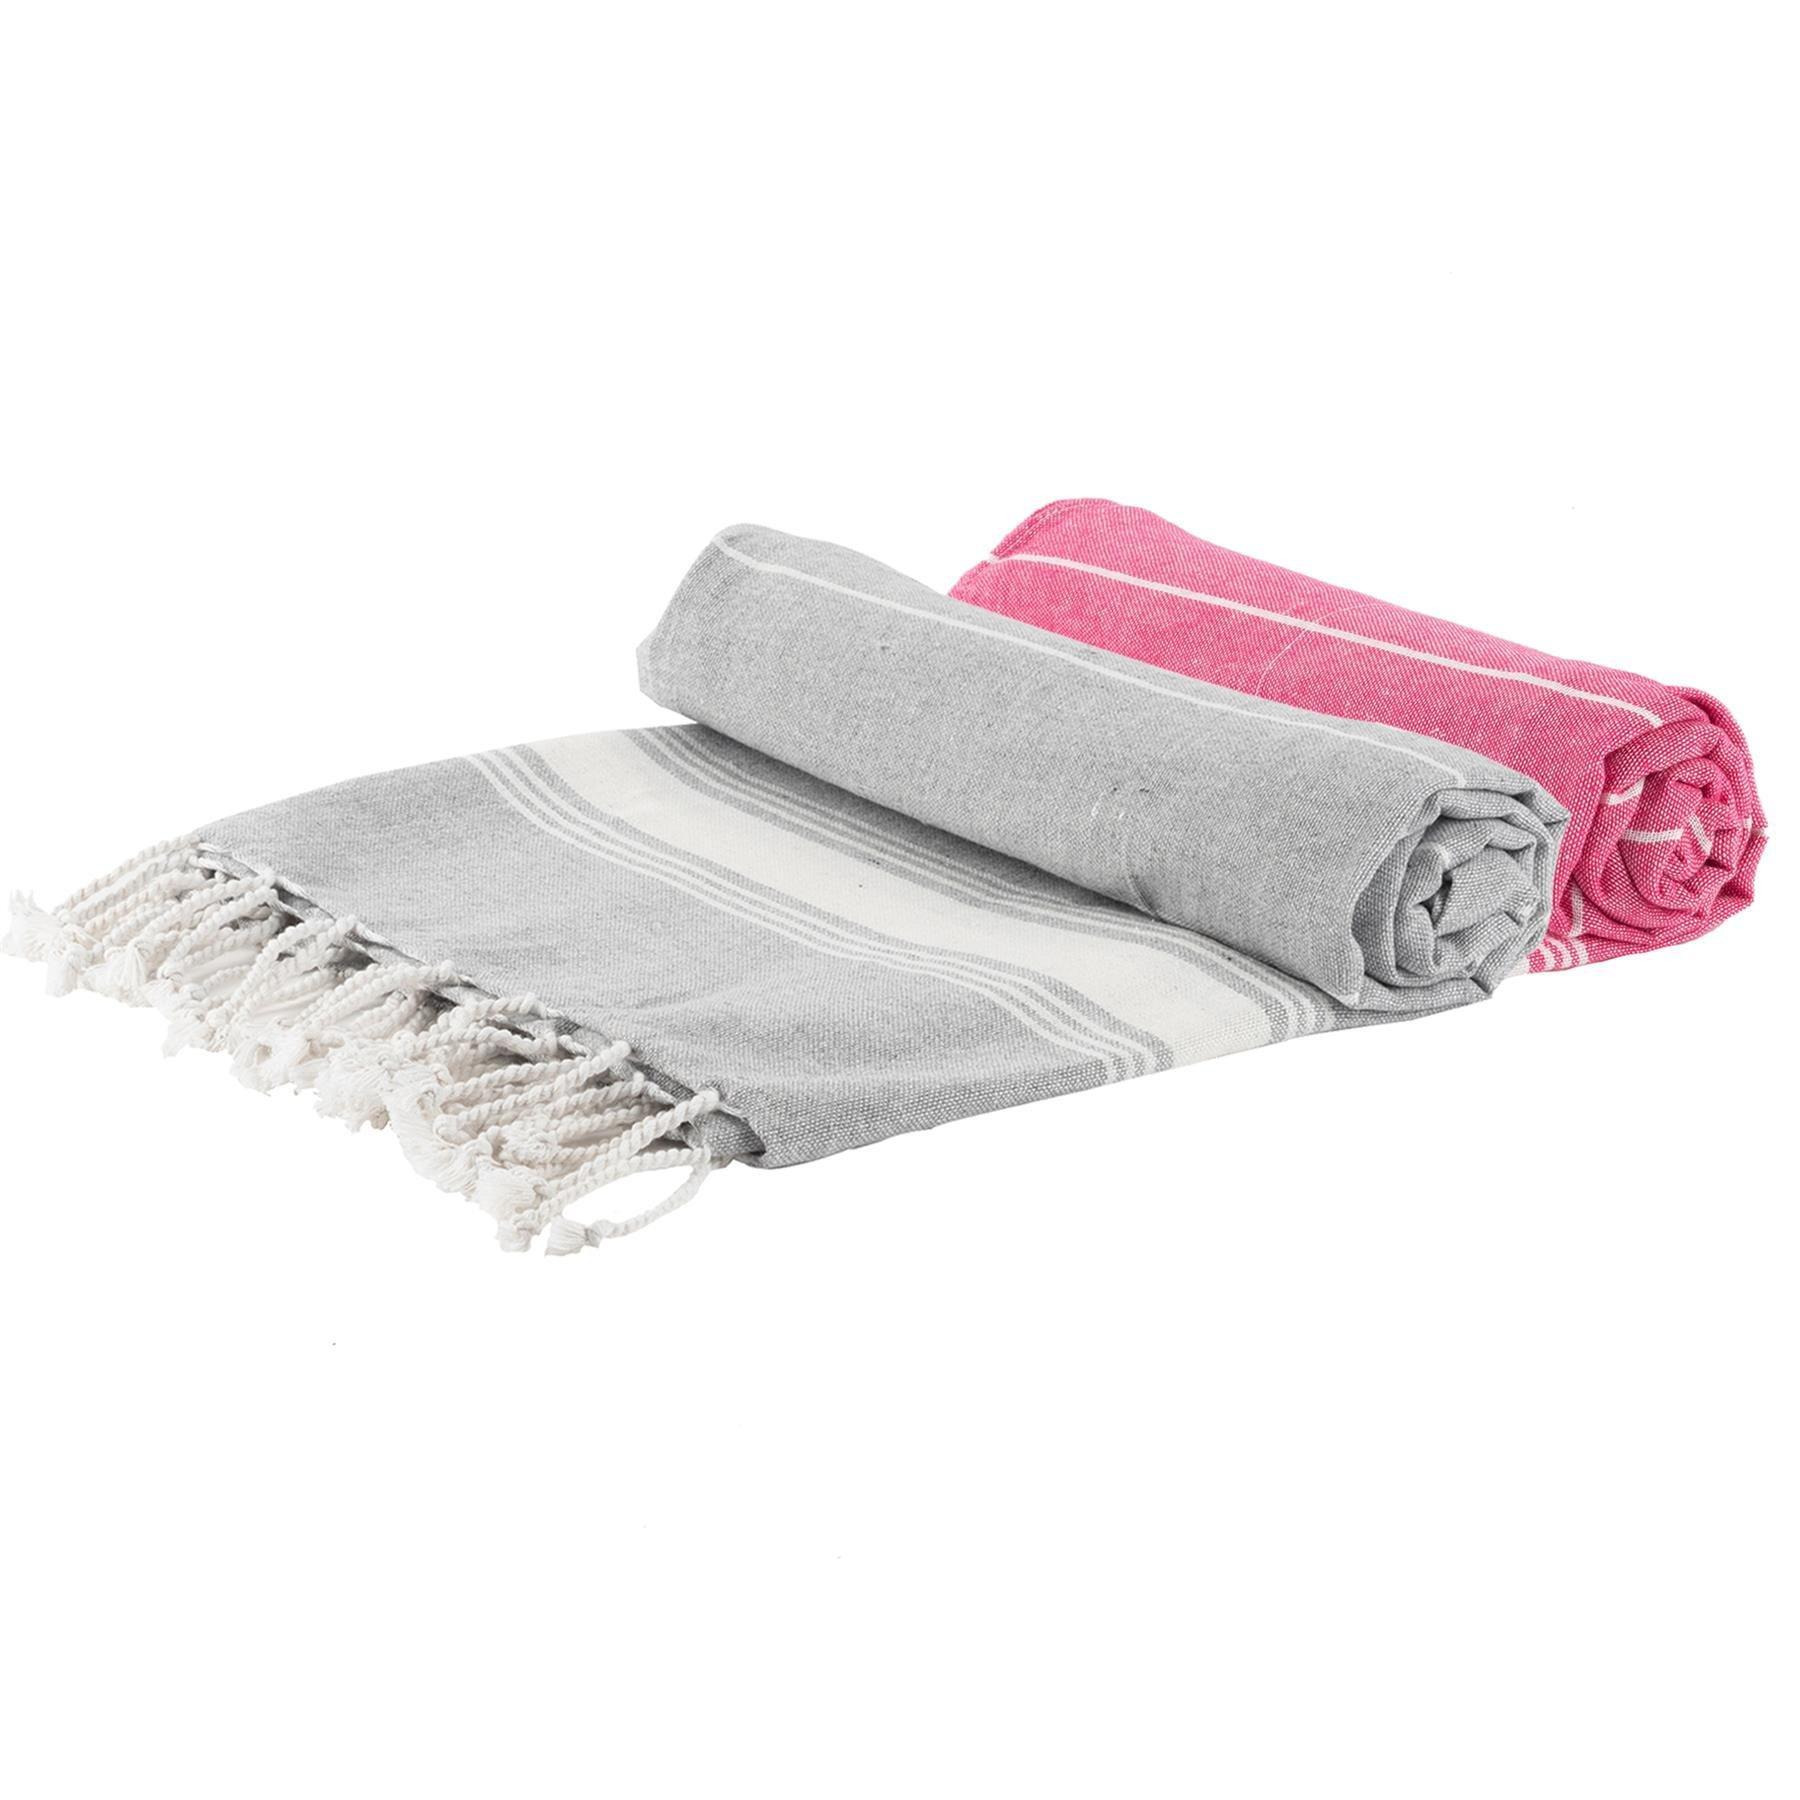 Turkish Cotton Bath Towels 170 x 90cm Grey/Pink Pack of 2 - image 1